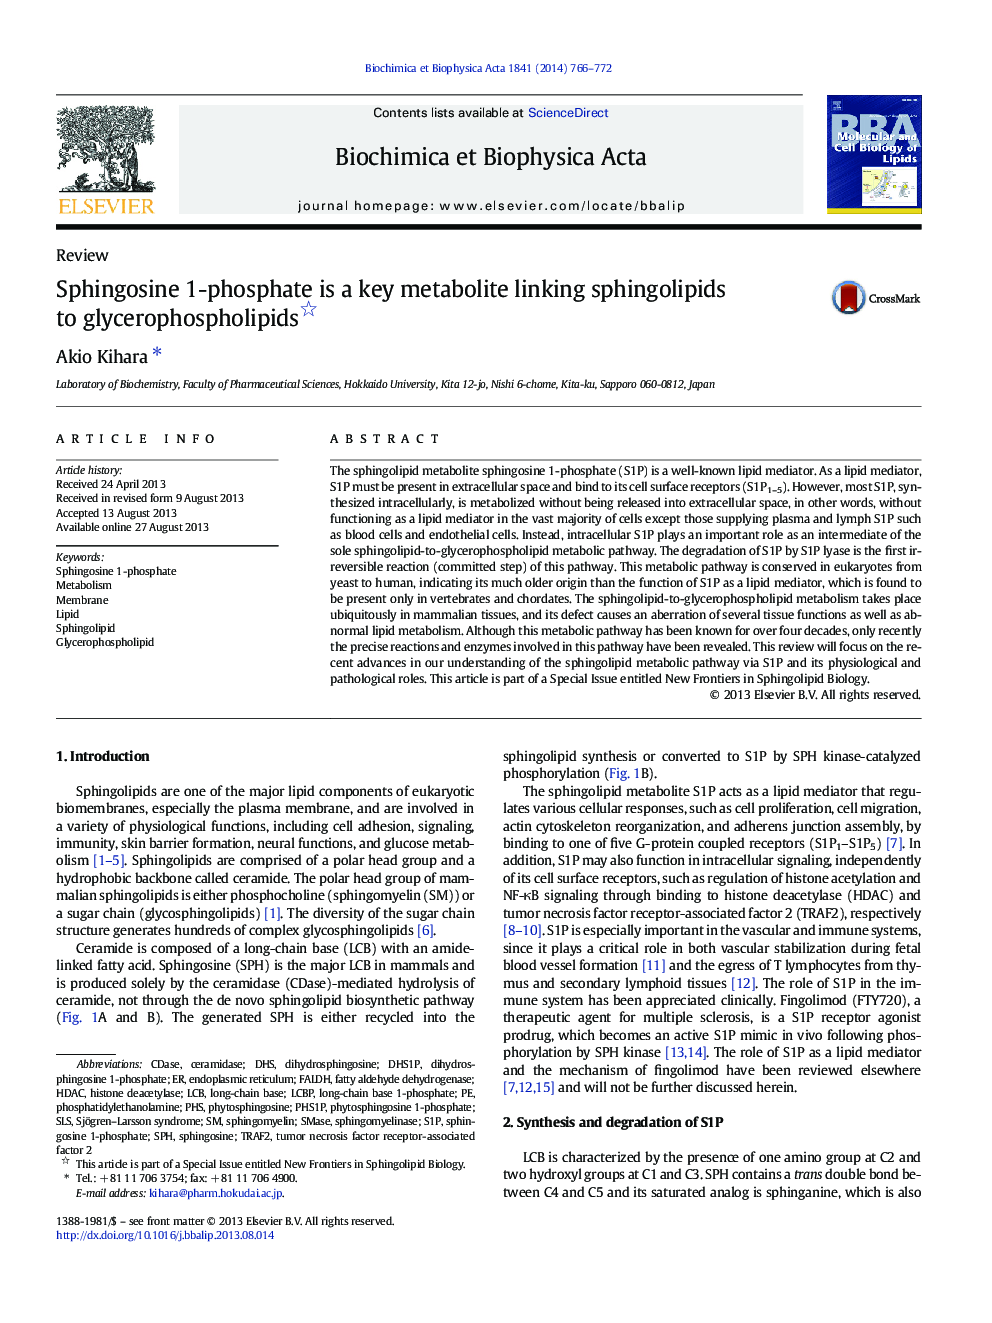 Sphingosine 1-phosphate is a key metabolite linking sphingolipids to glycerophospholipids 